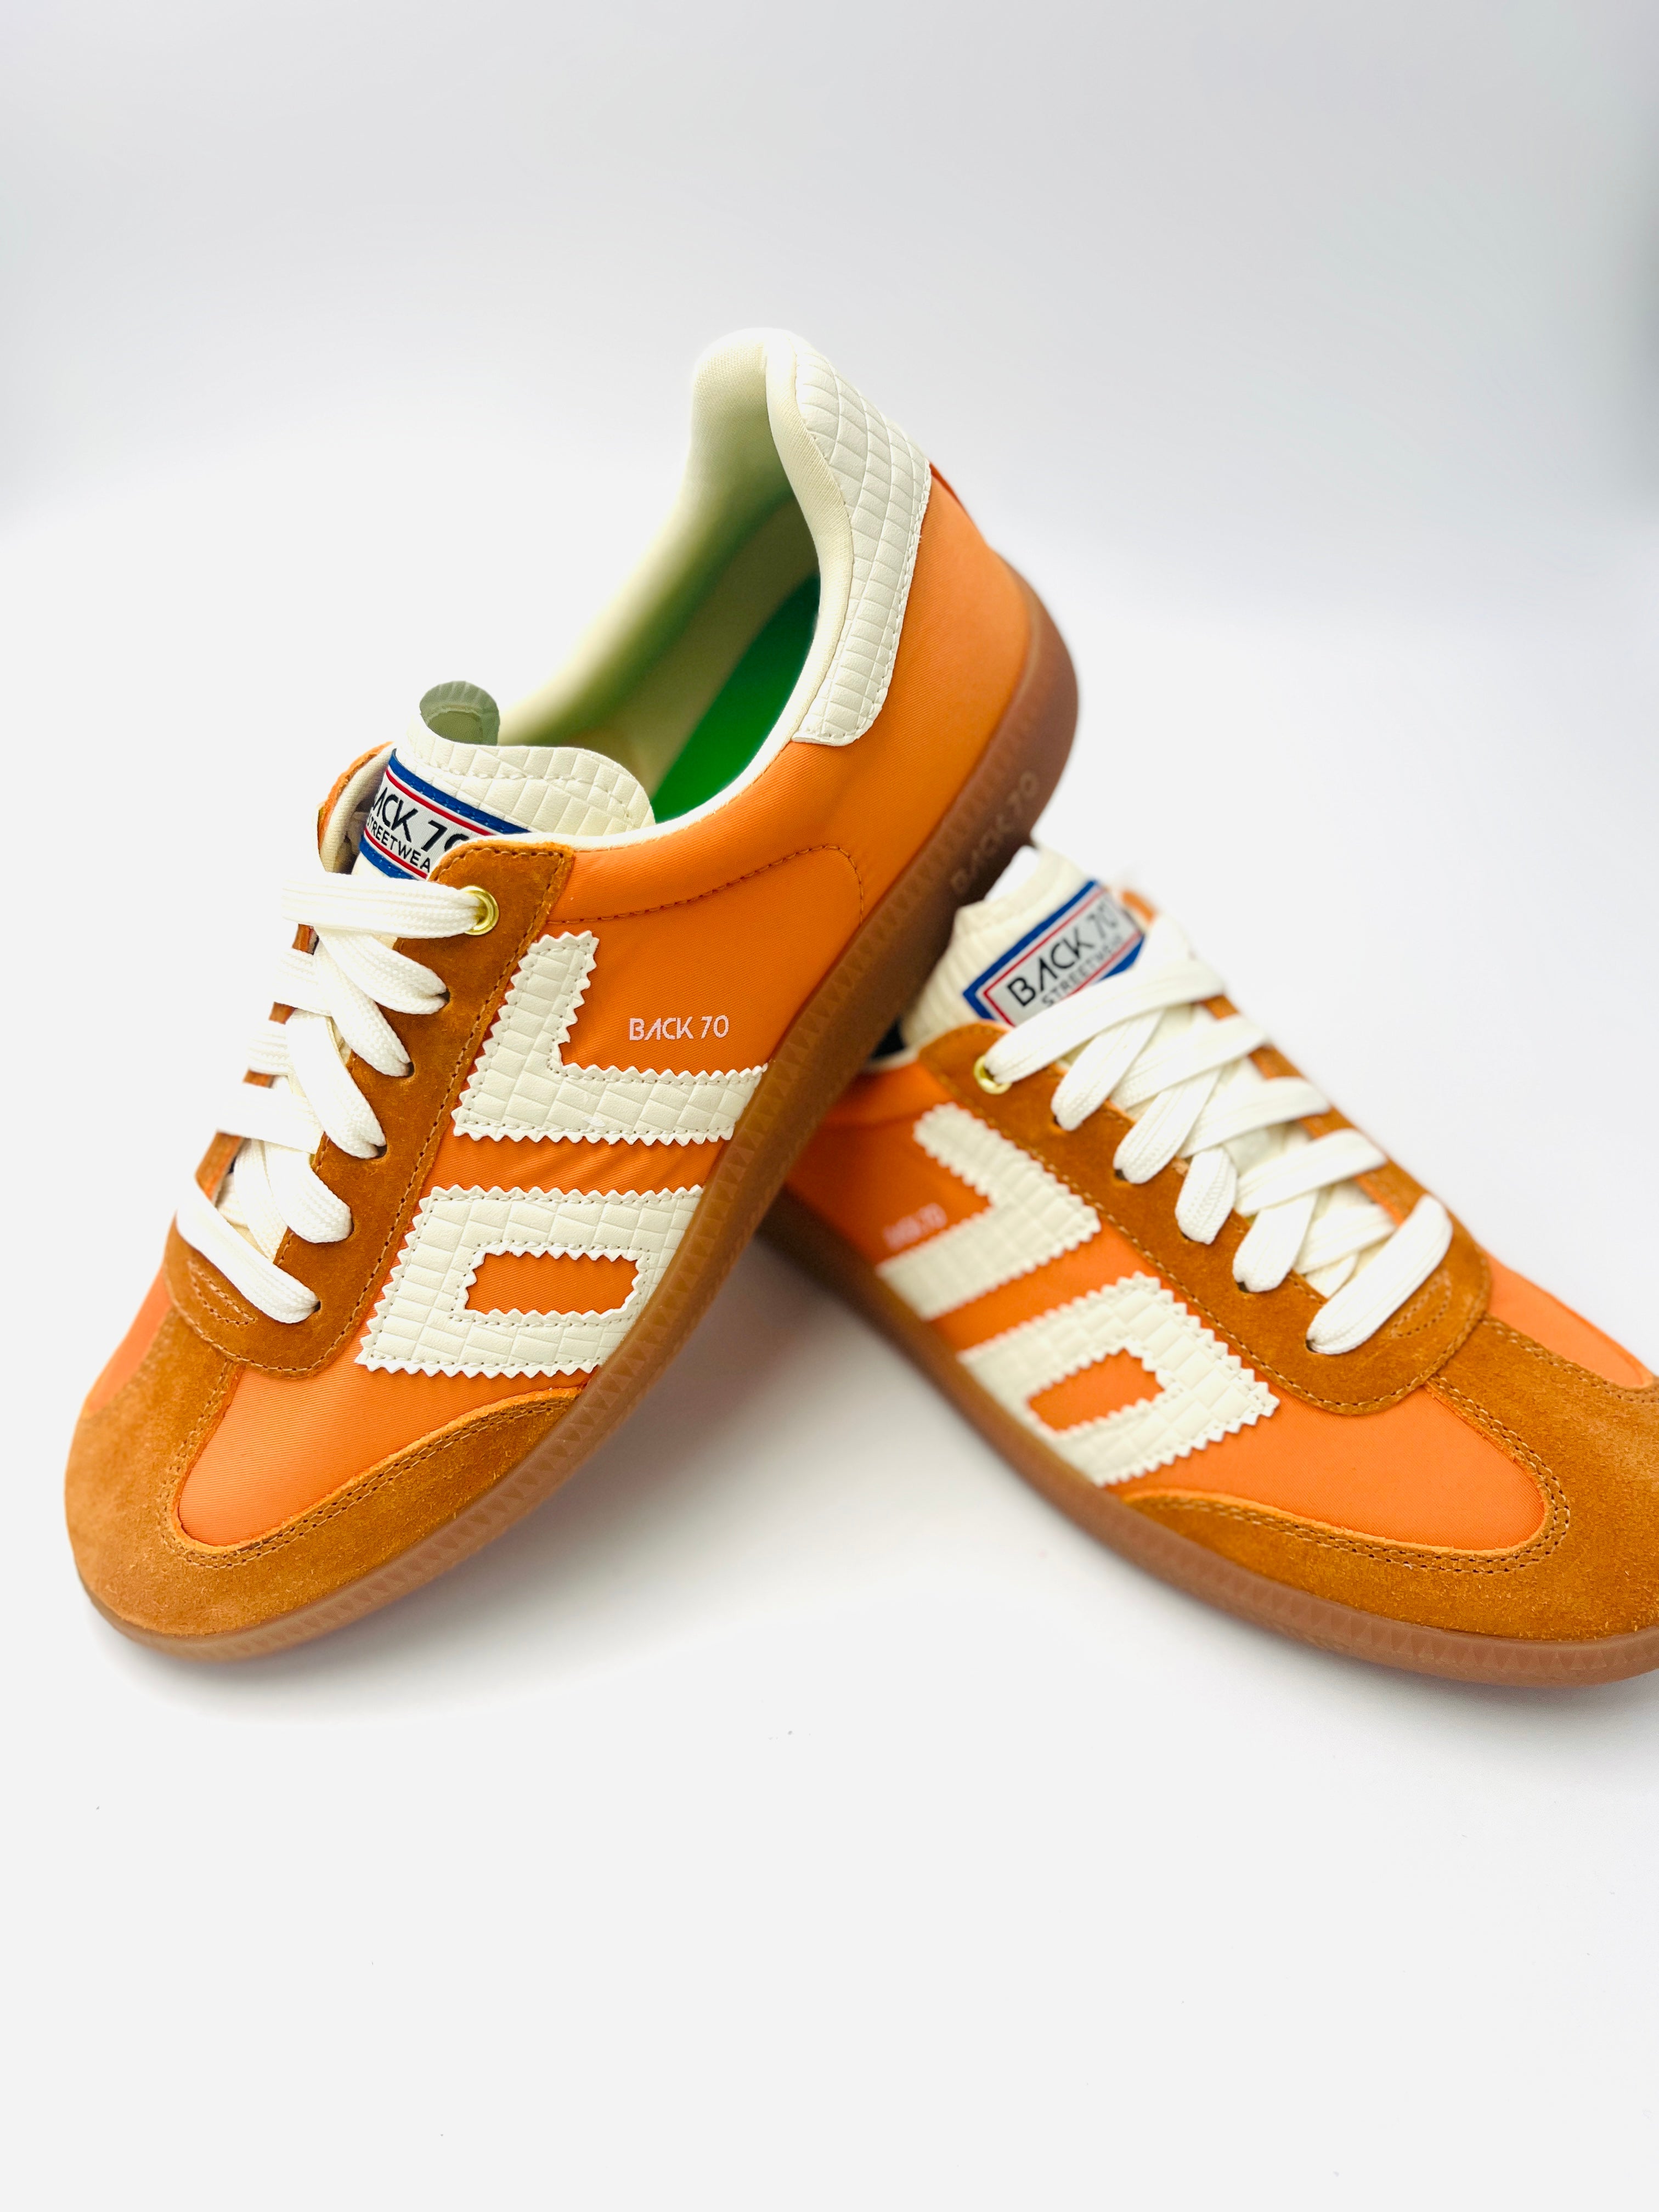 Sneaker GHOST • Back70 Orange/Creme